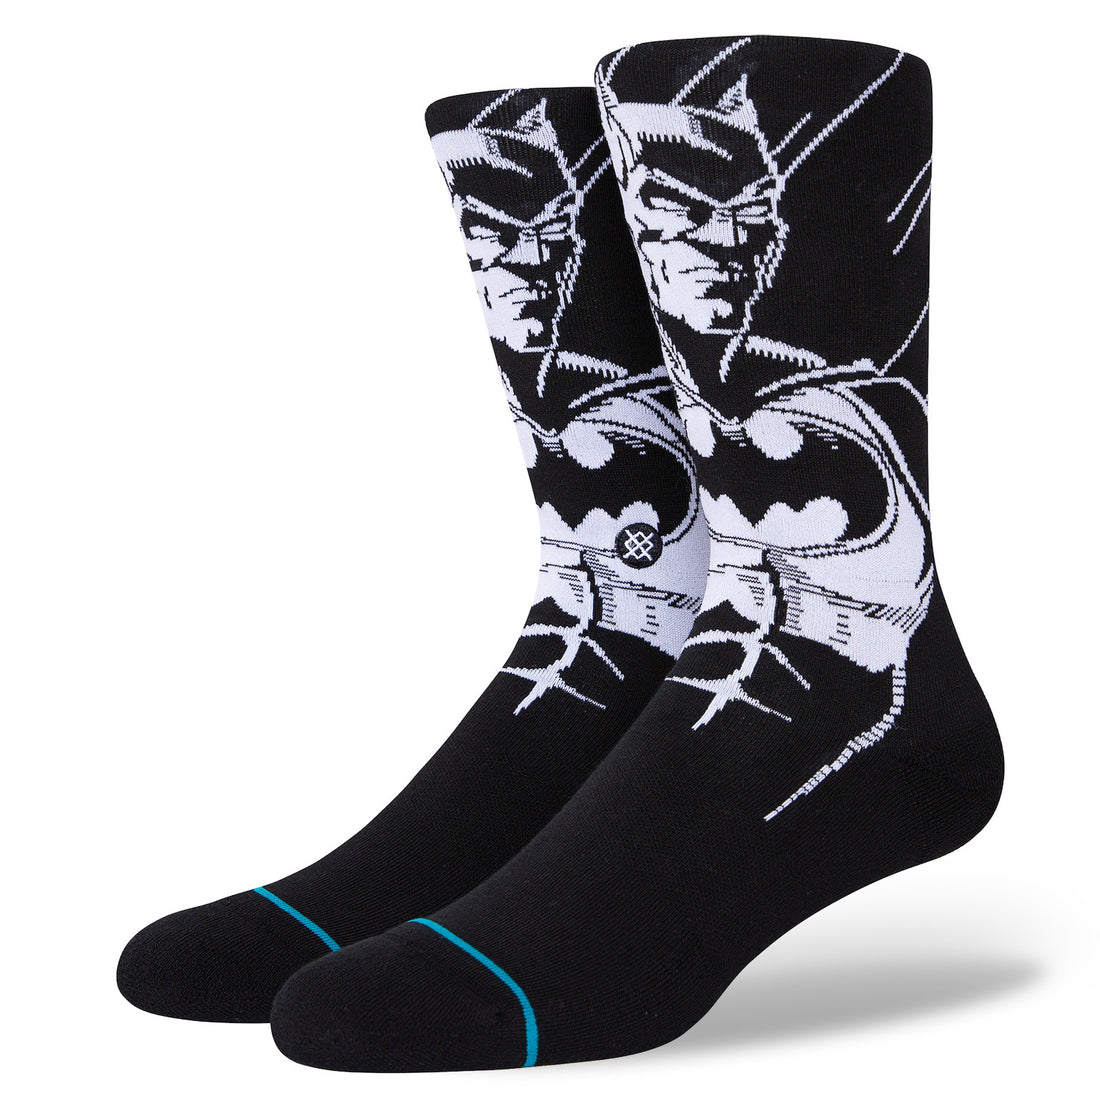 Stance x Batman "The Batman" Socks (Black)